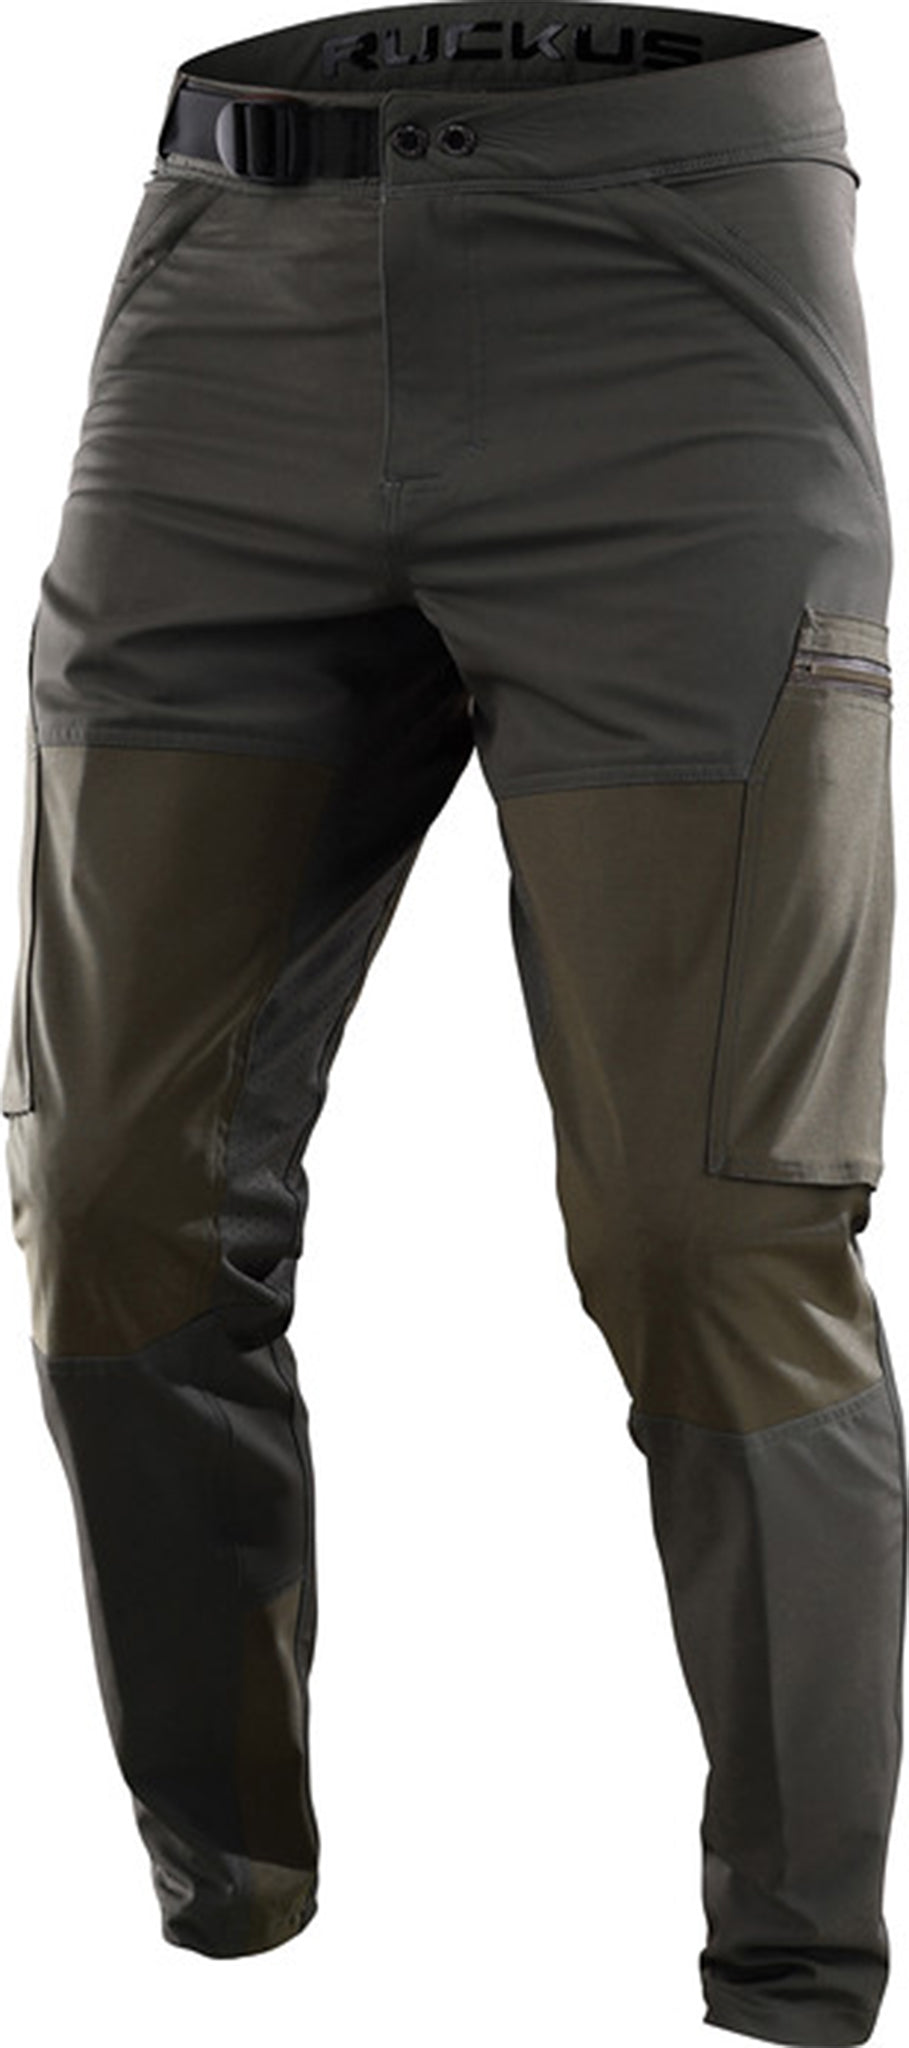 Troy Lee Designs Ruckus Cargo Pants - Men's | Altitude Sports